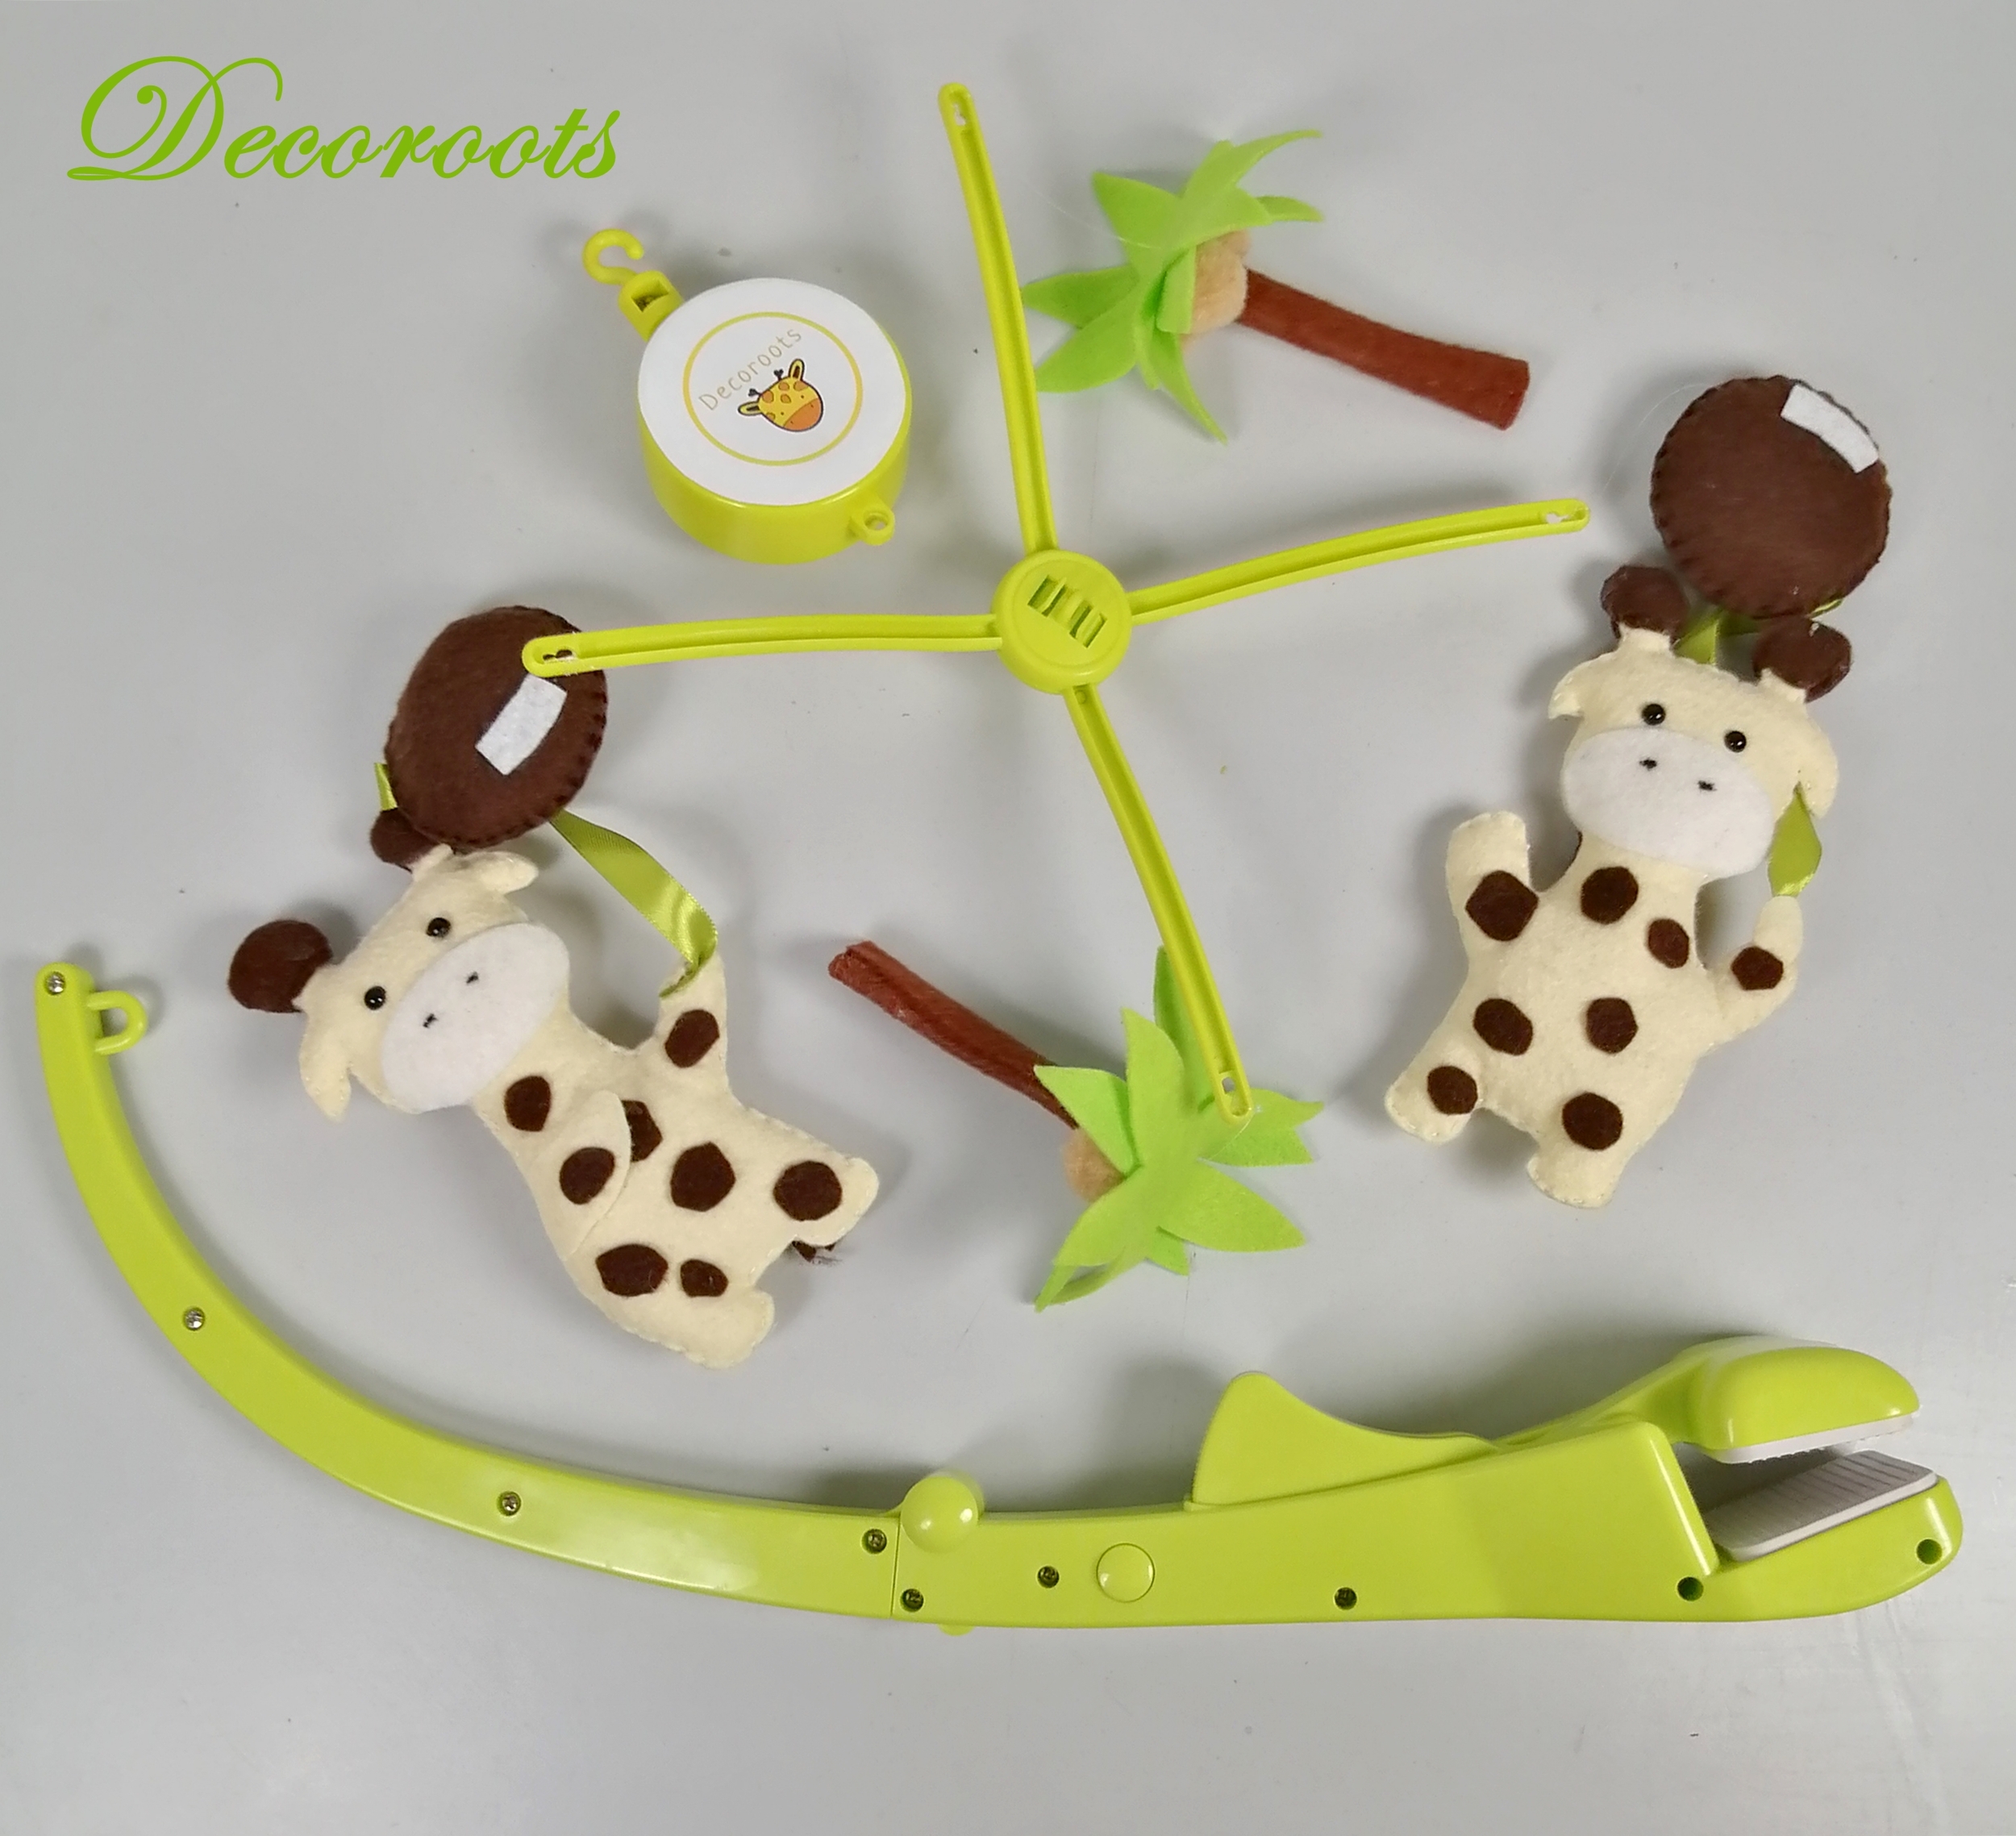 mobile bebe musical thème jungle girafe vert anis marron chocolat decoration 2